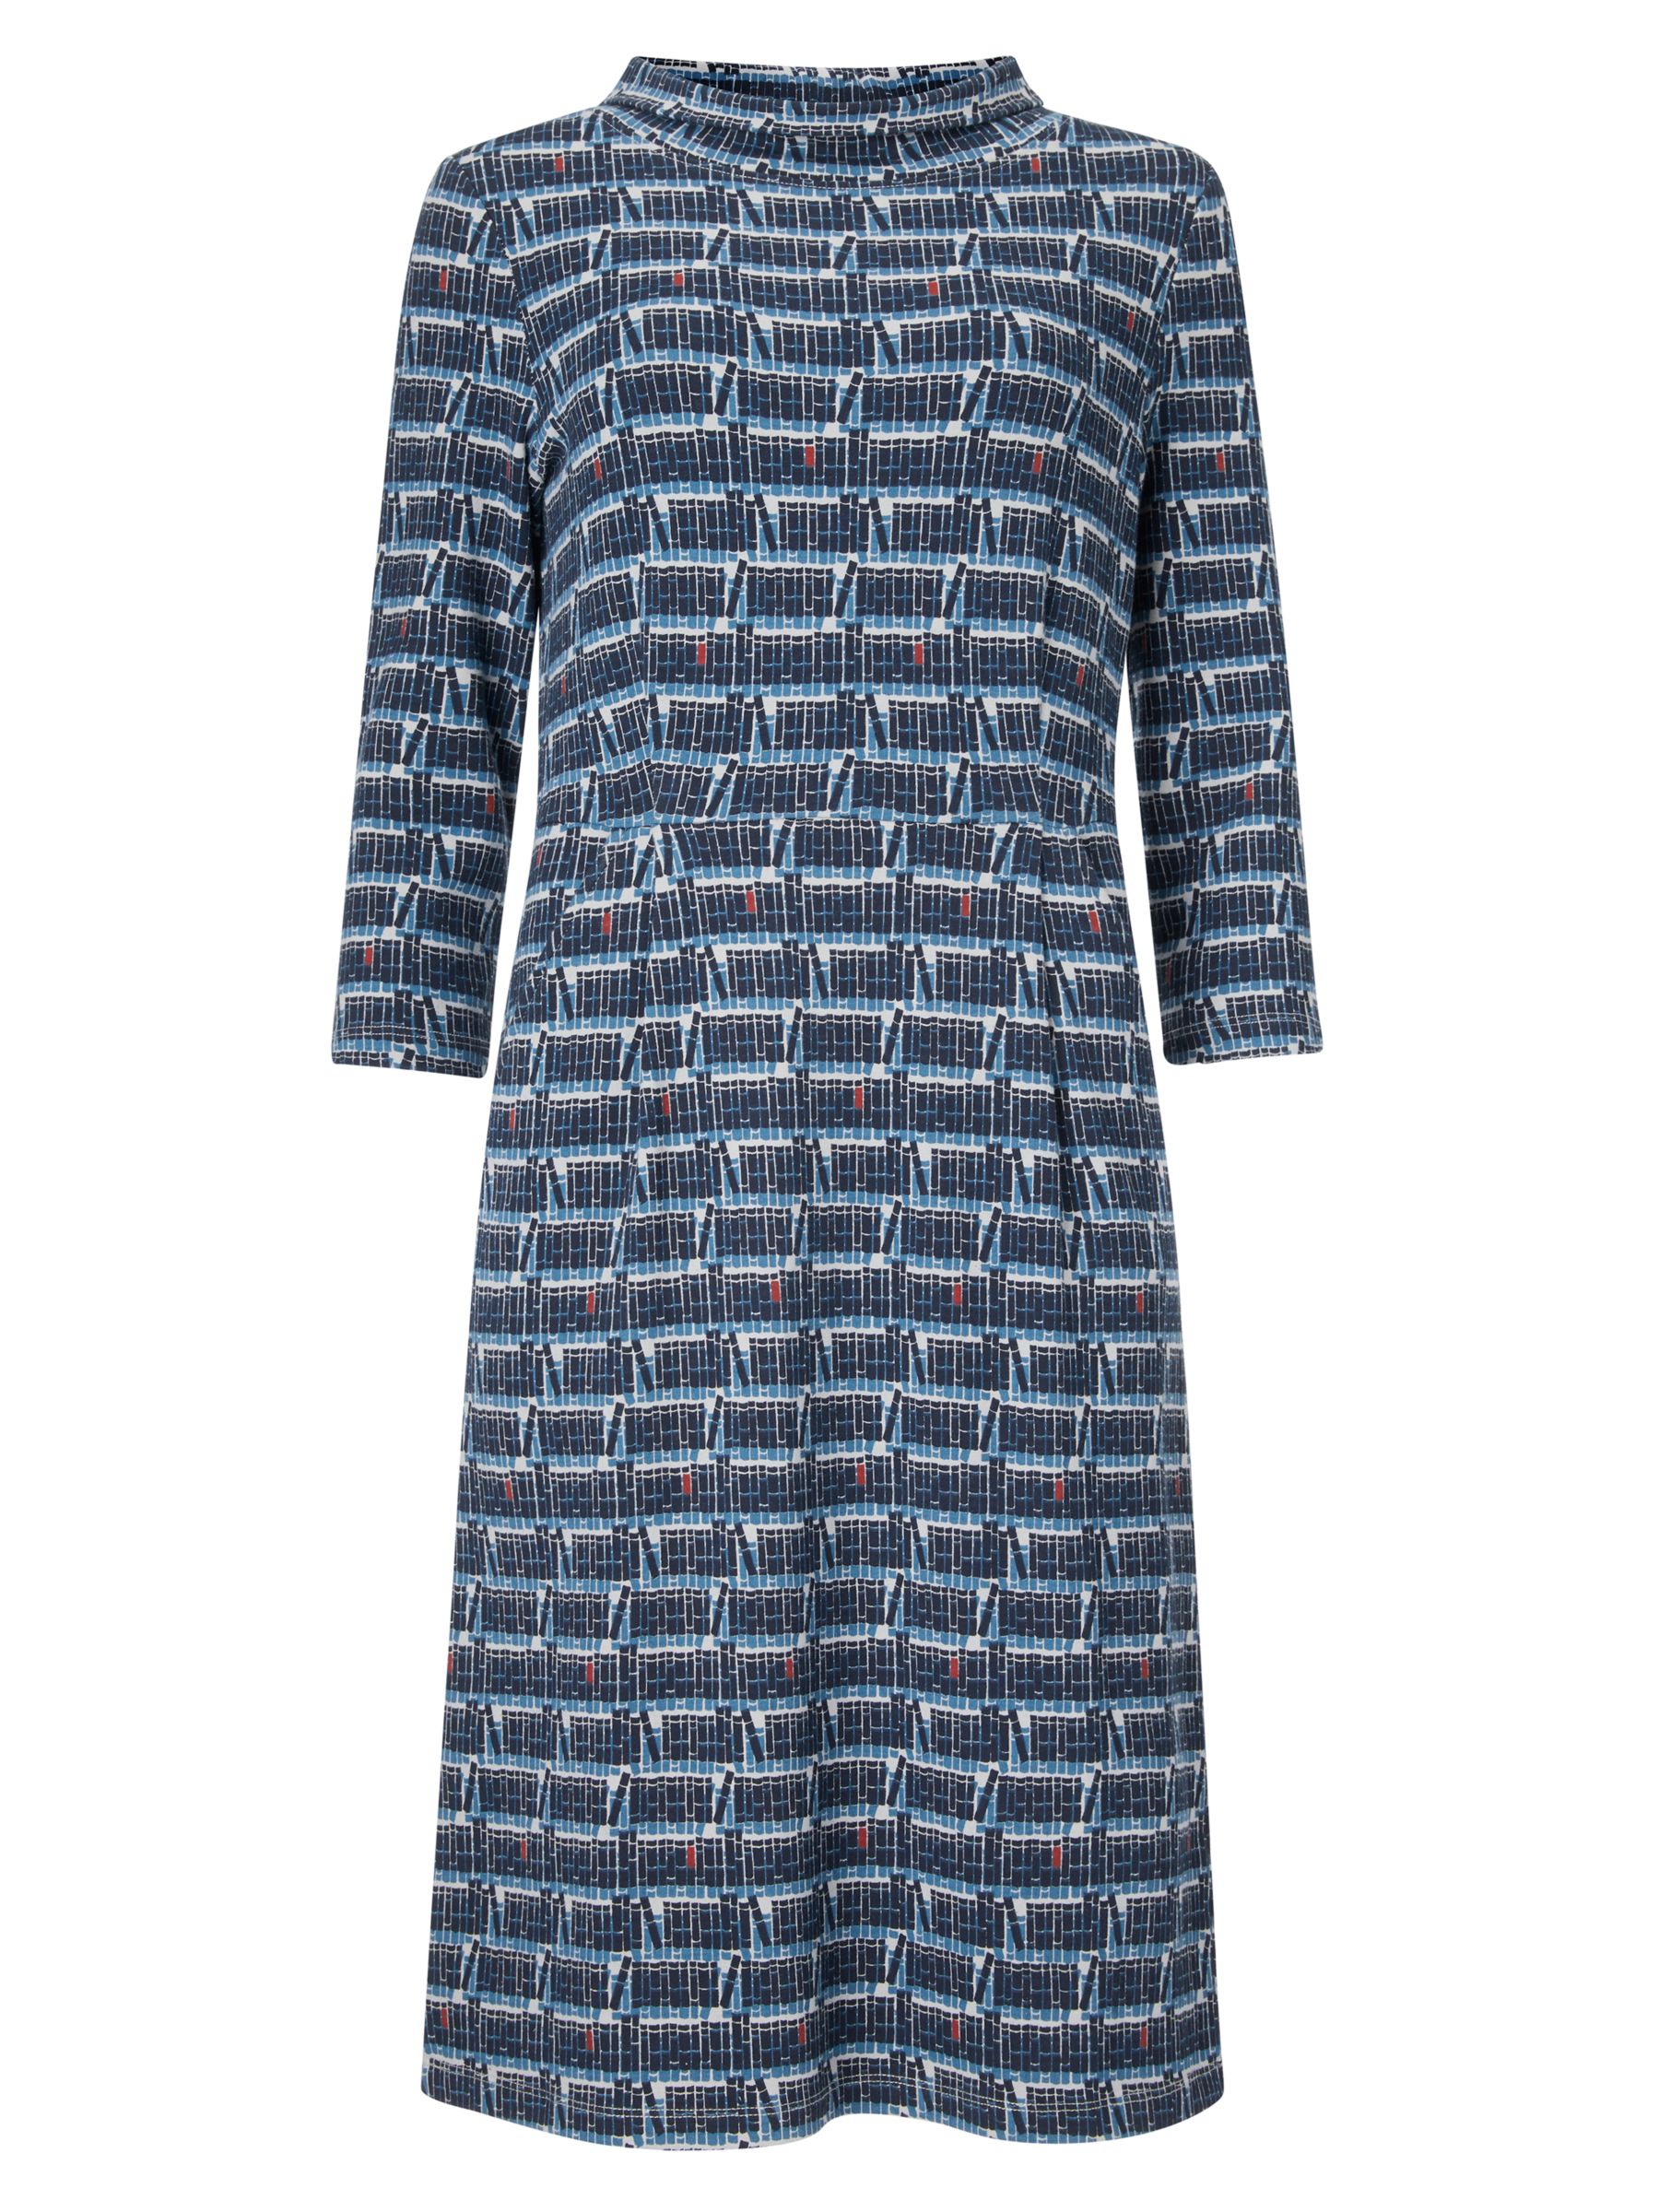 Seasalt Cleats Printed Jersey Dress | Bookshelf Pebble at John Lewis ...